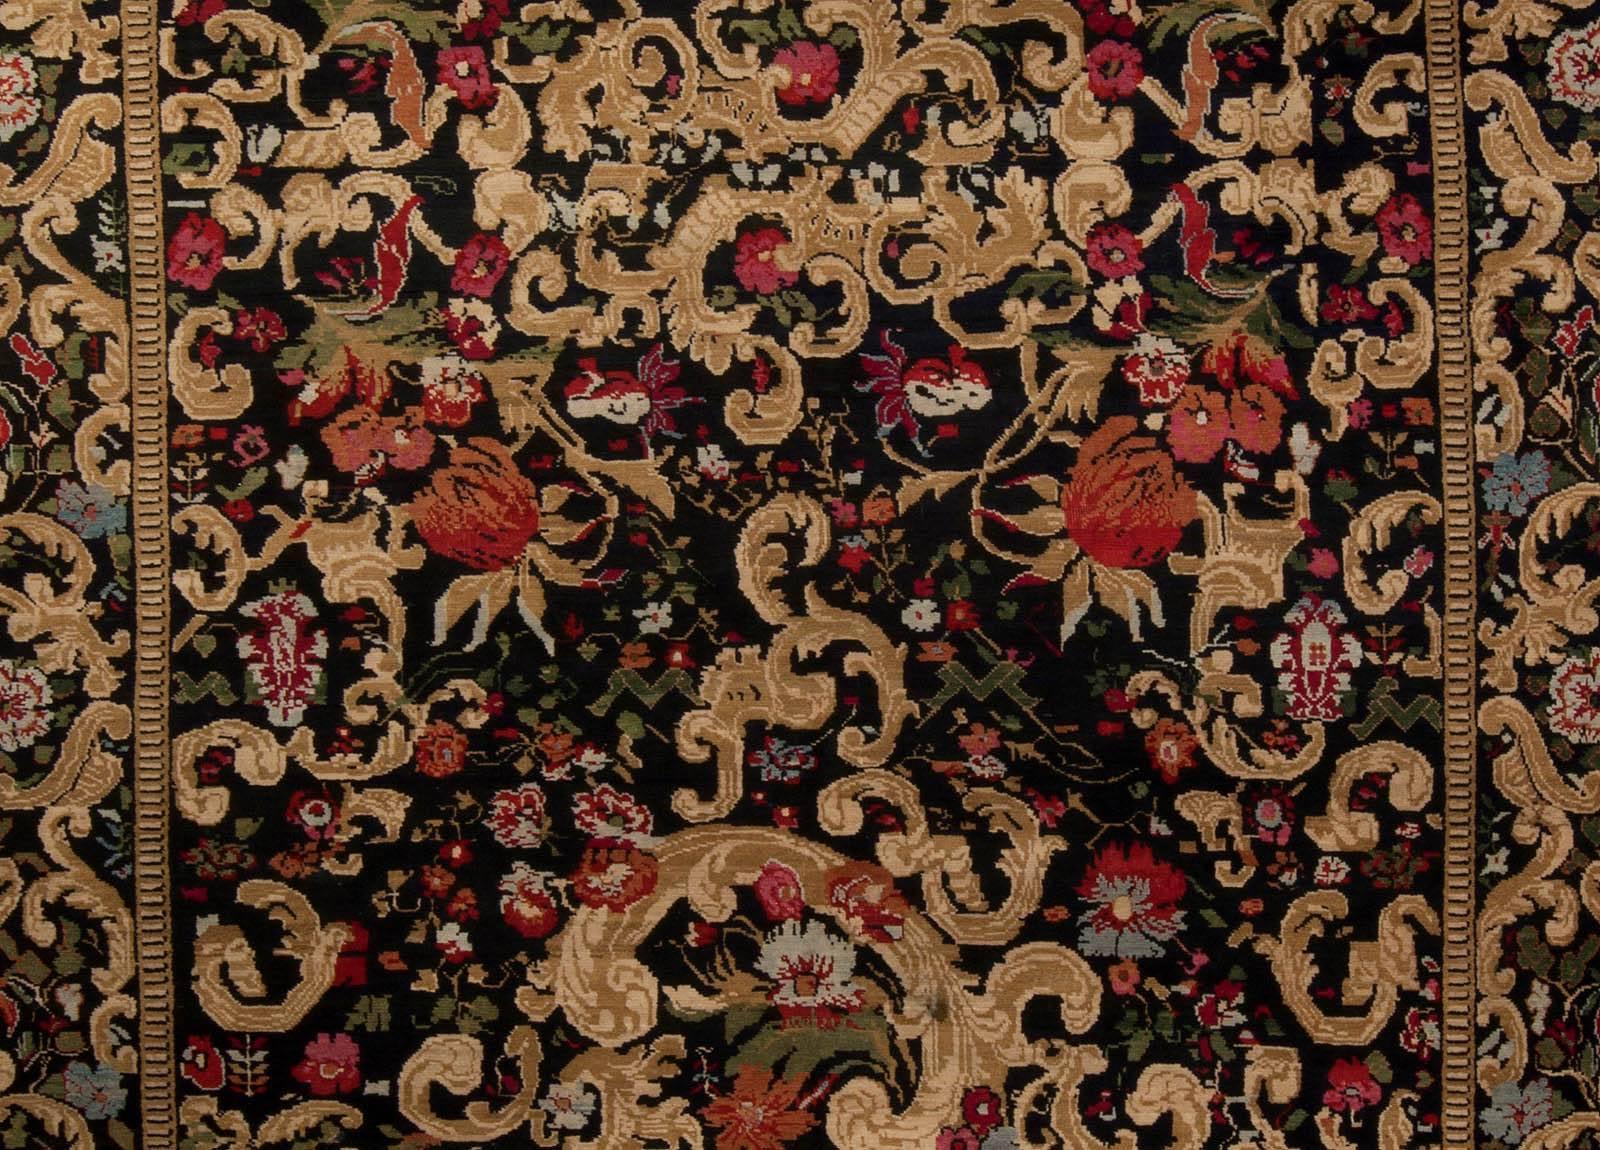 19th century Karabagh floral design handmade wool rug
Size: 8'5